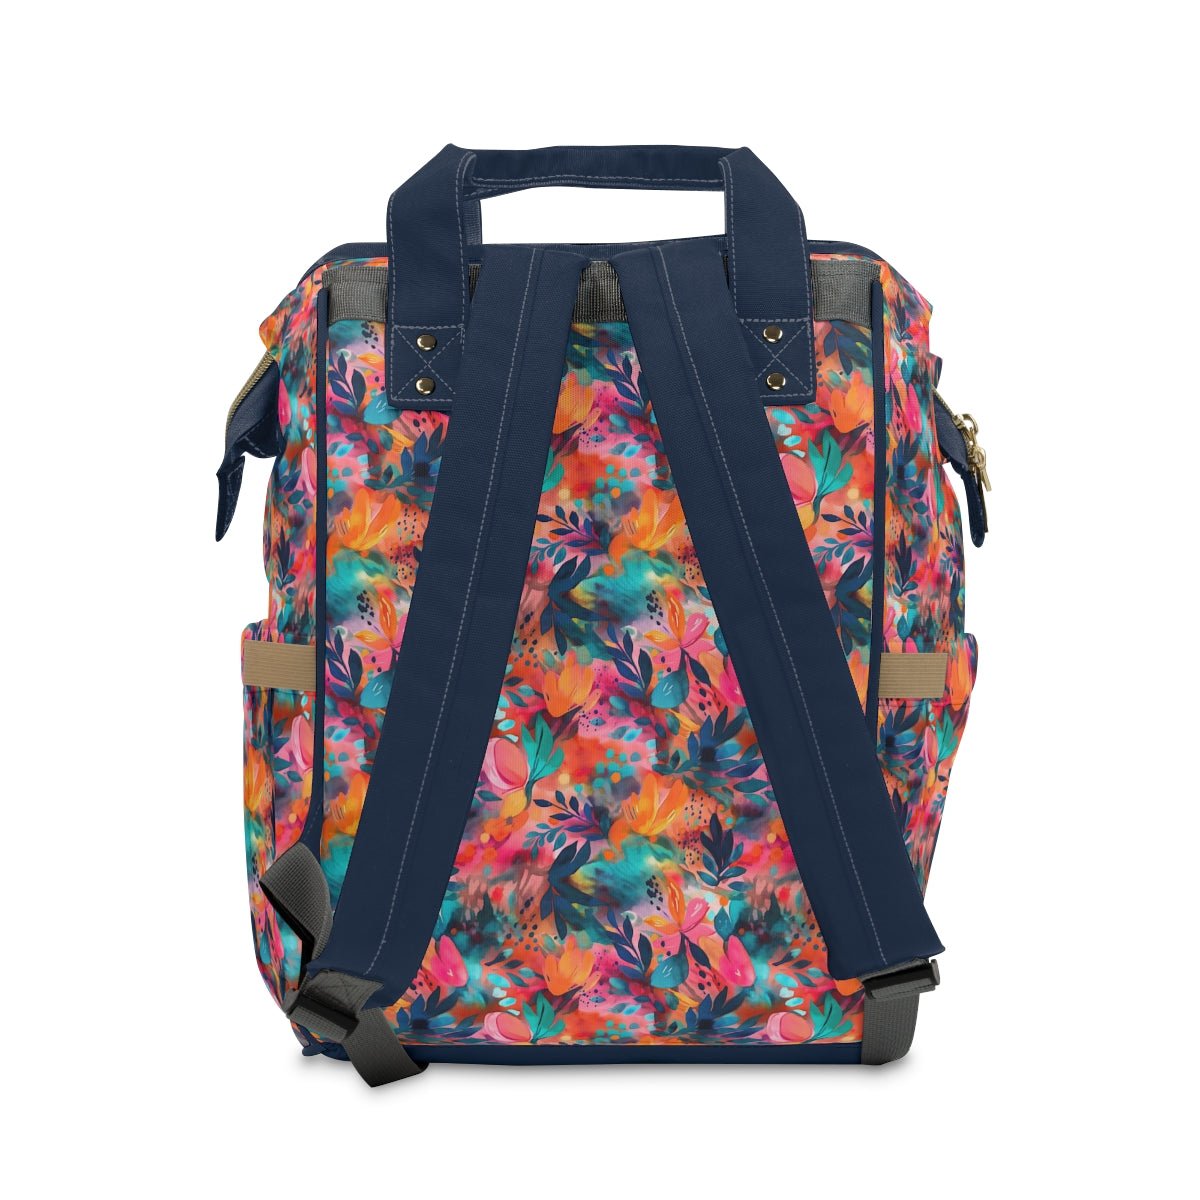 Diaper Backpack Bag in Neon Whimsy - Modern Kastle Shop